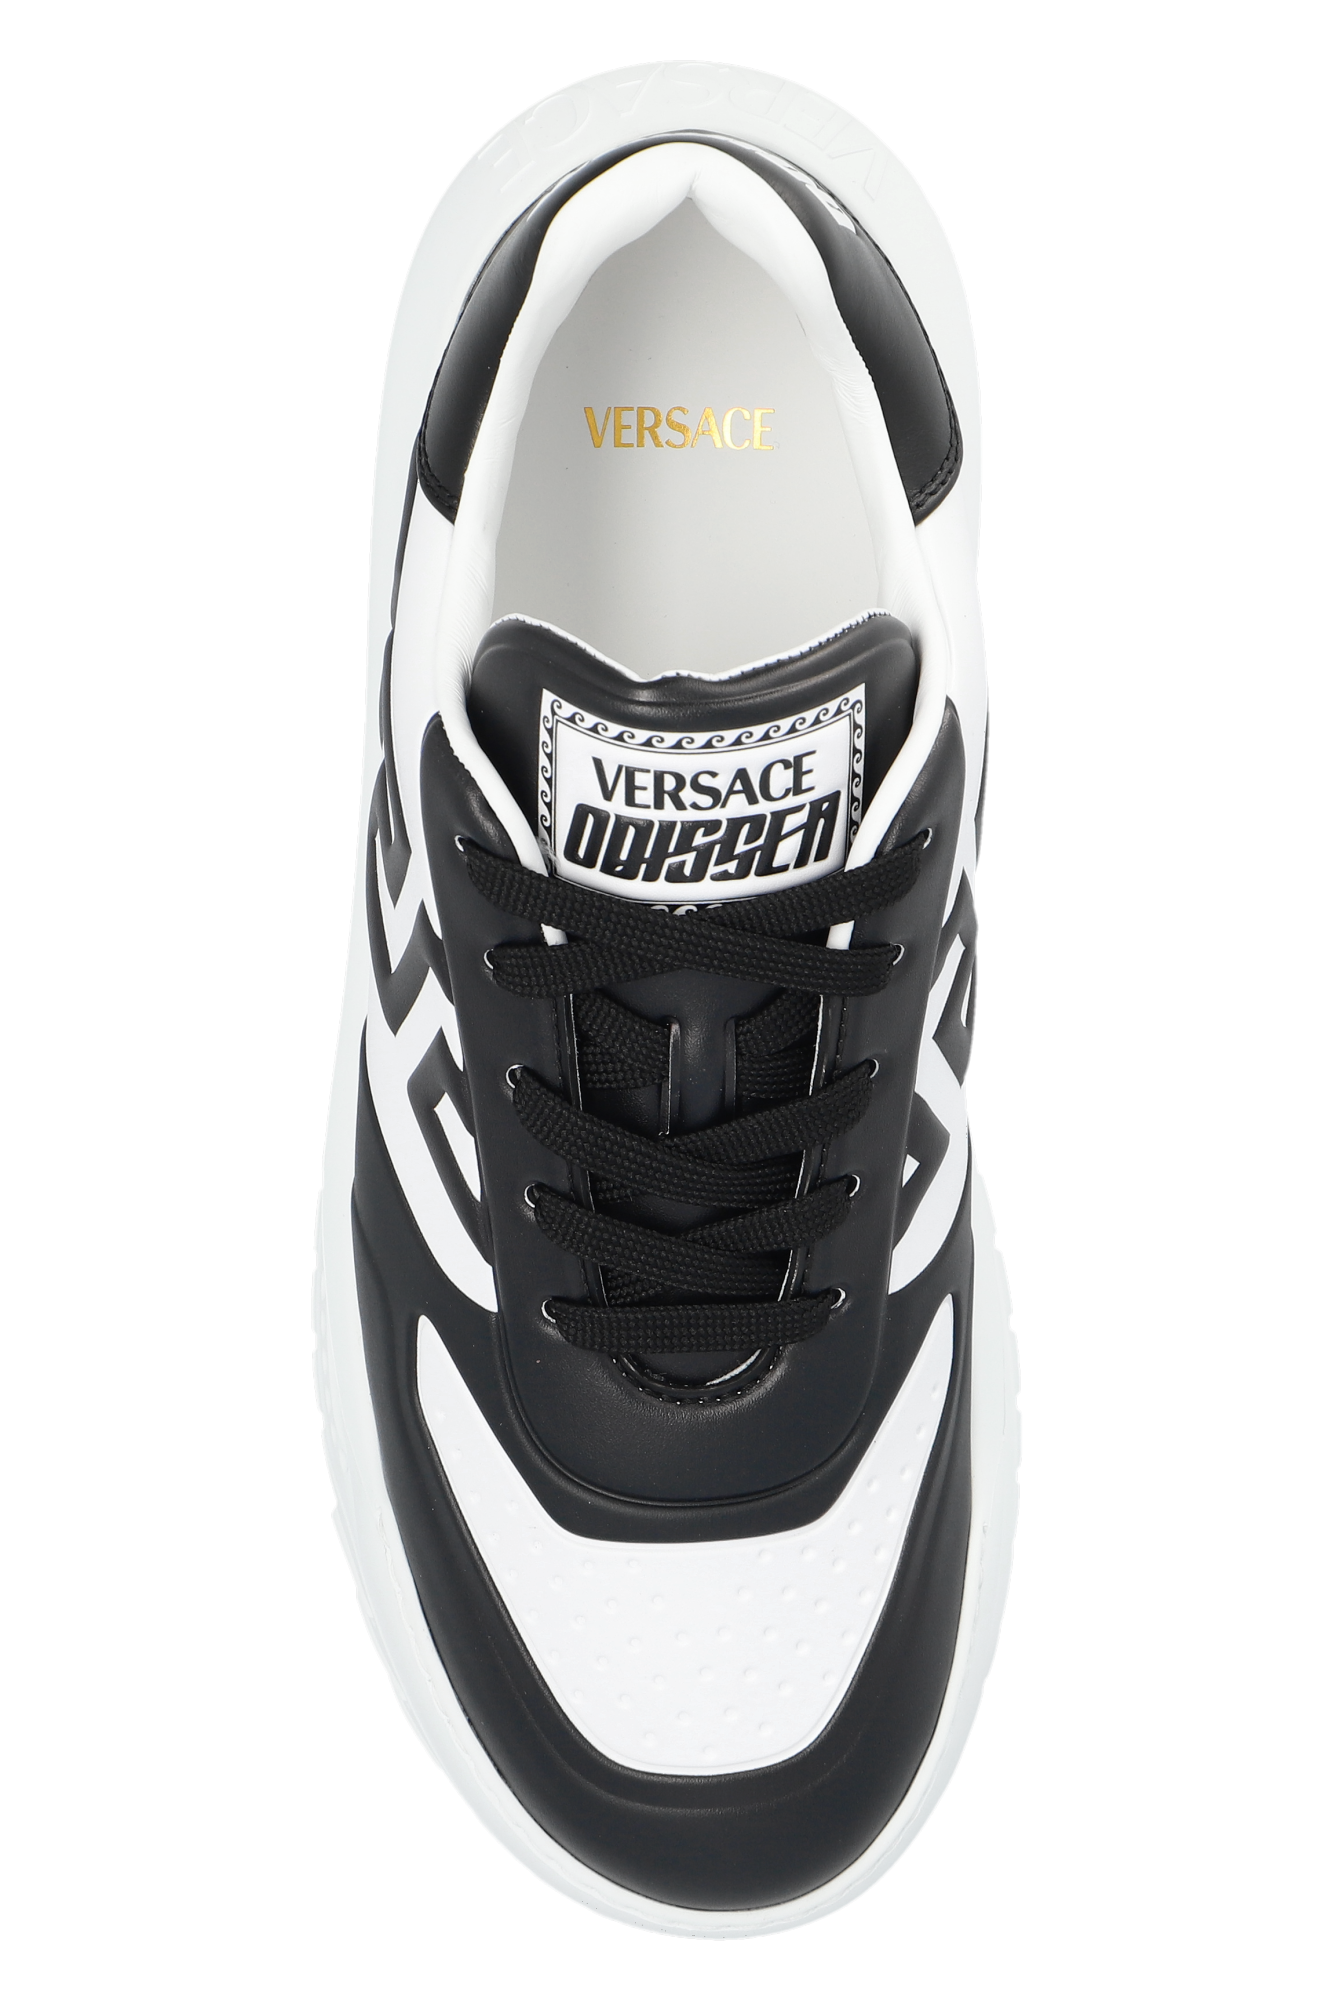 Versace ‘Greca Odissea’ sneakers